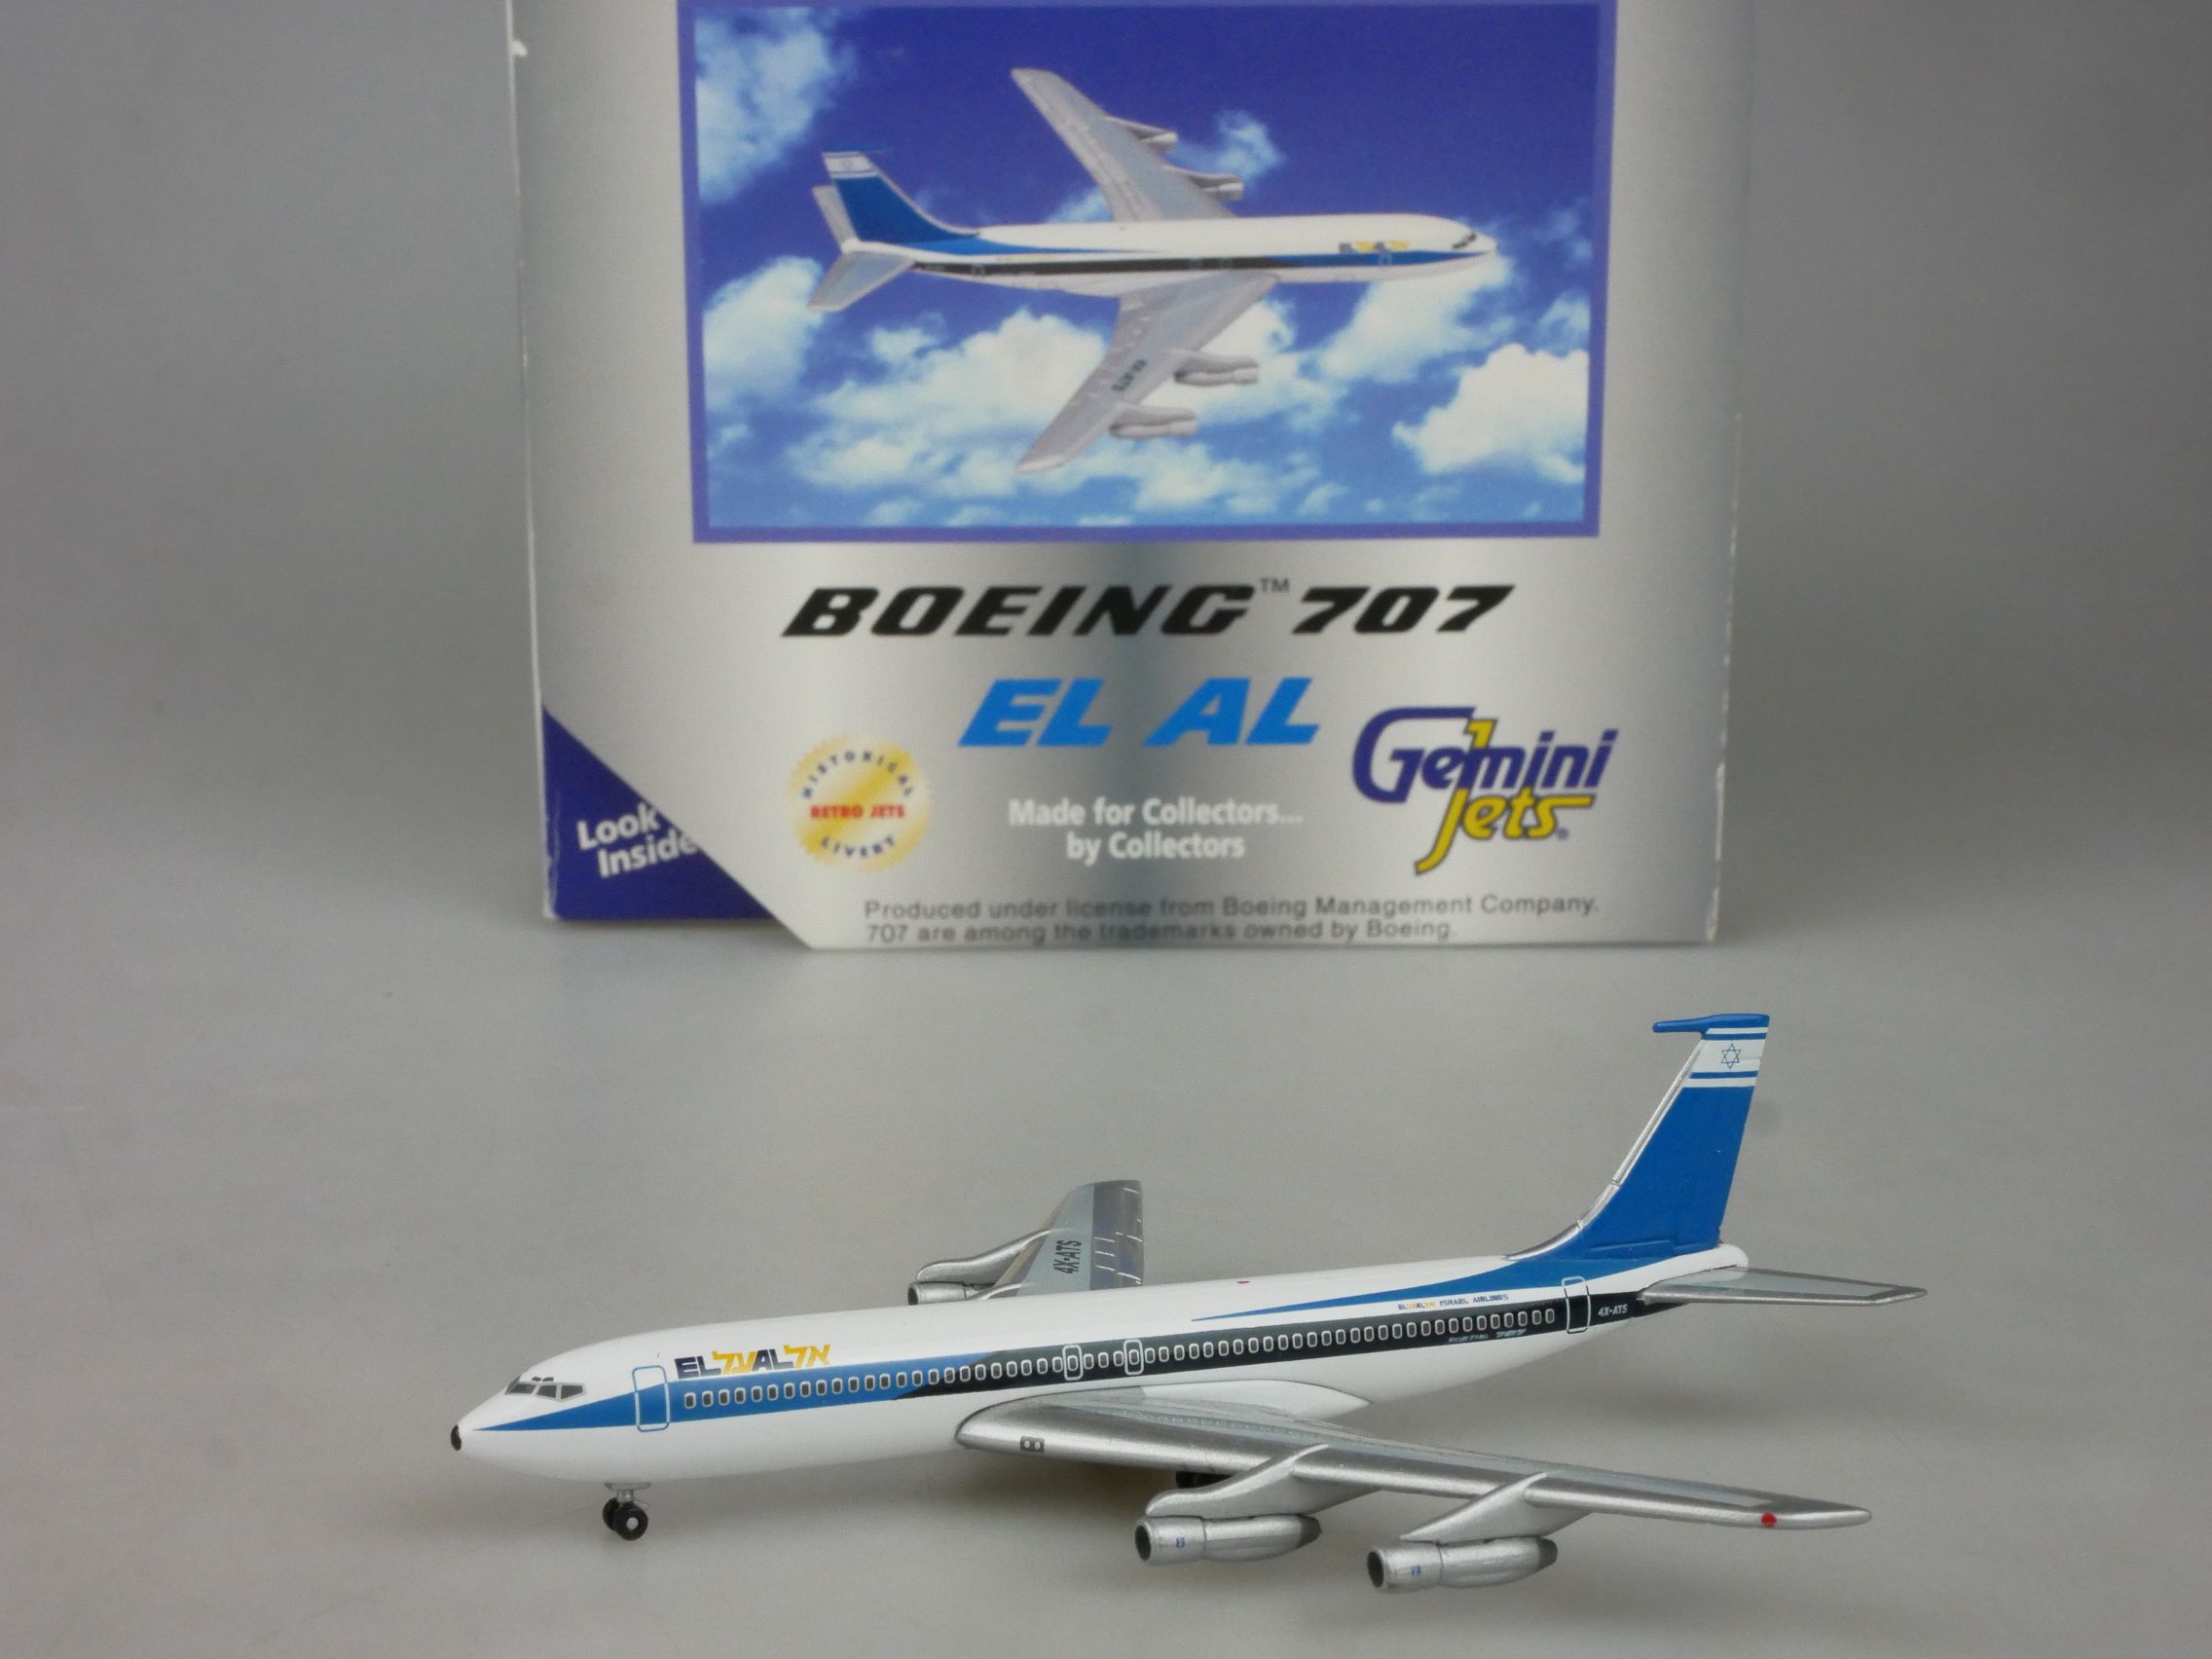 Gemini Jets 1/400 BOEING 707 358B EL AL aircraft plane GJELY186 + Box 126690